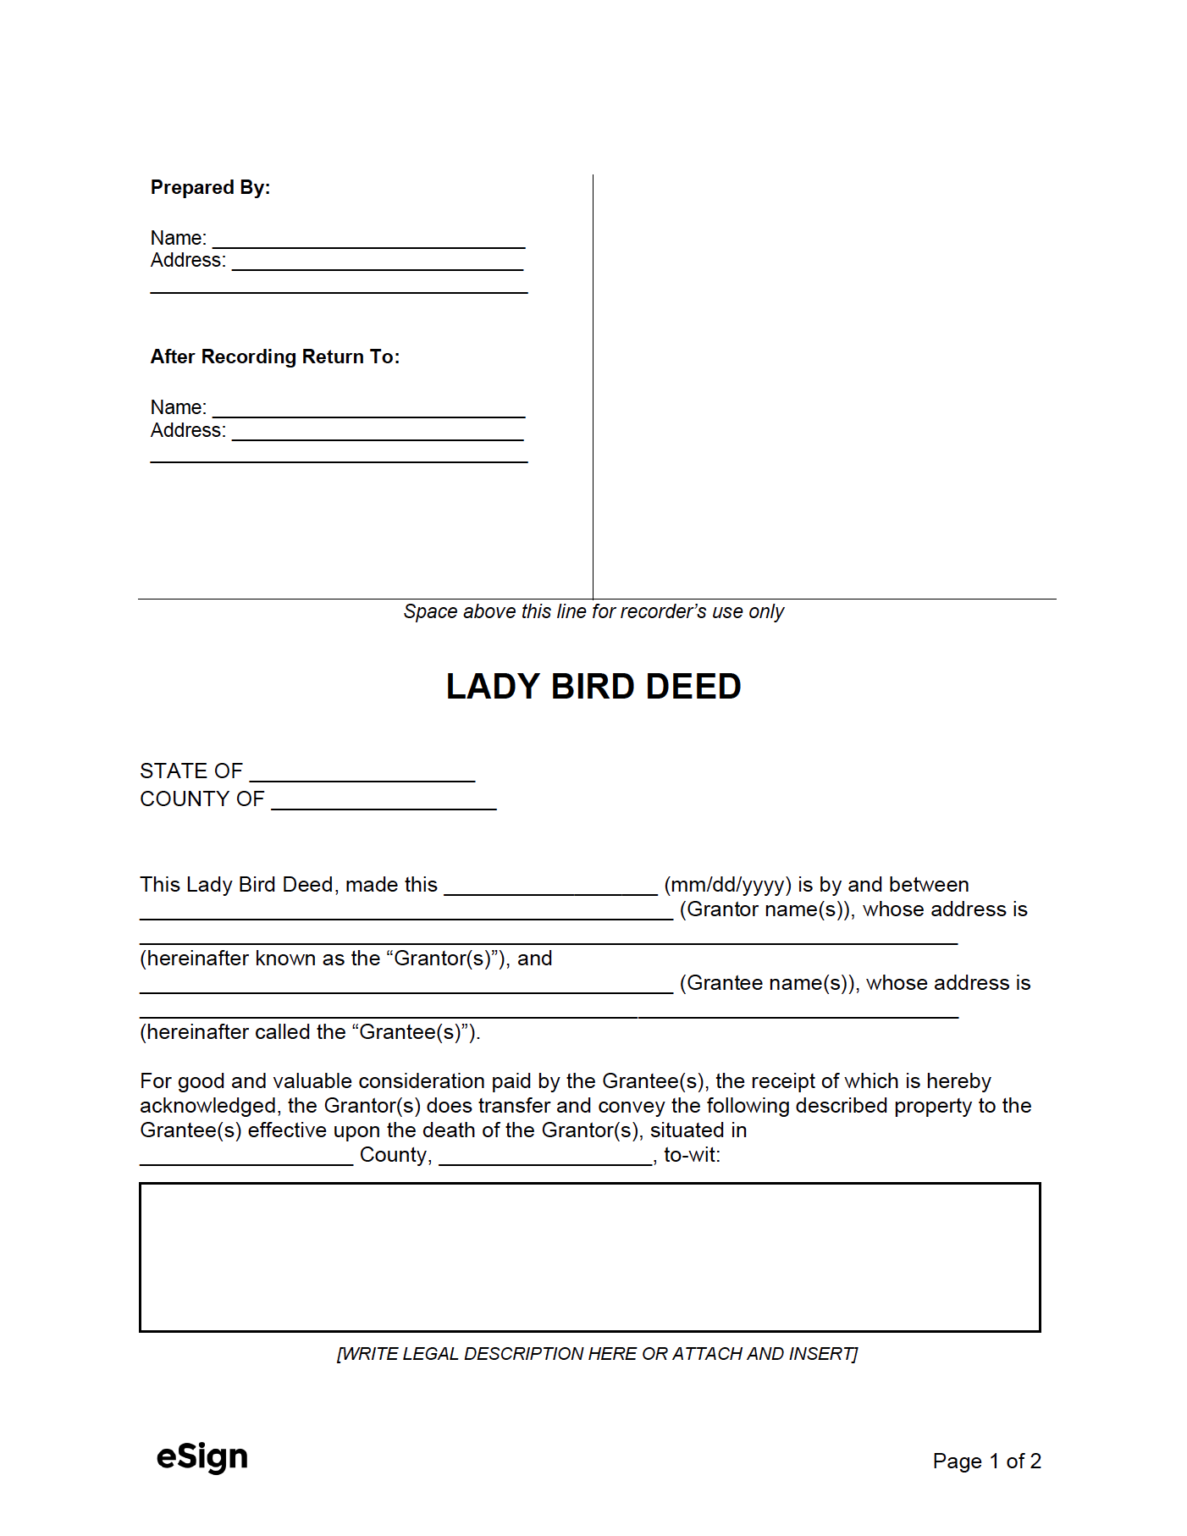 free-lady-bird-deed-form-pdf-word